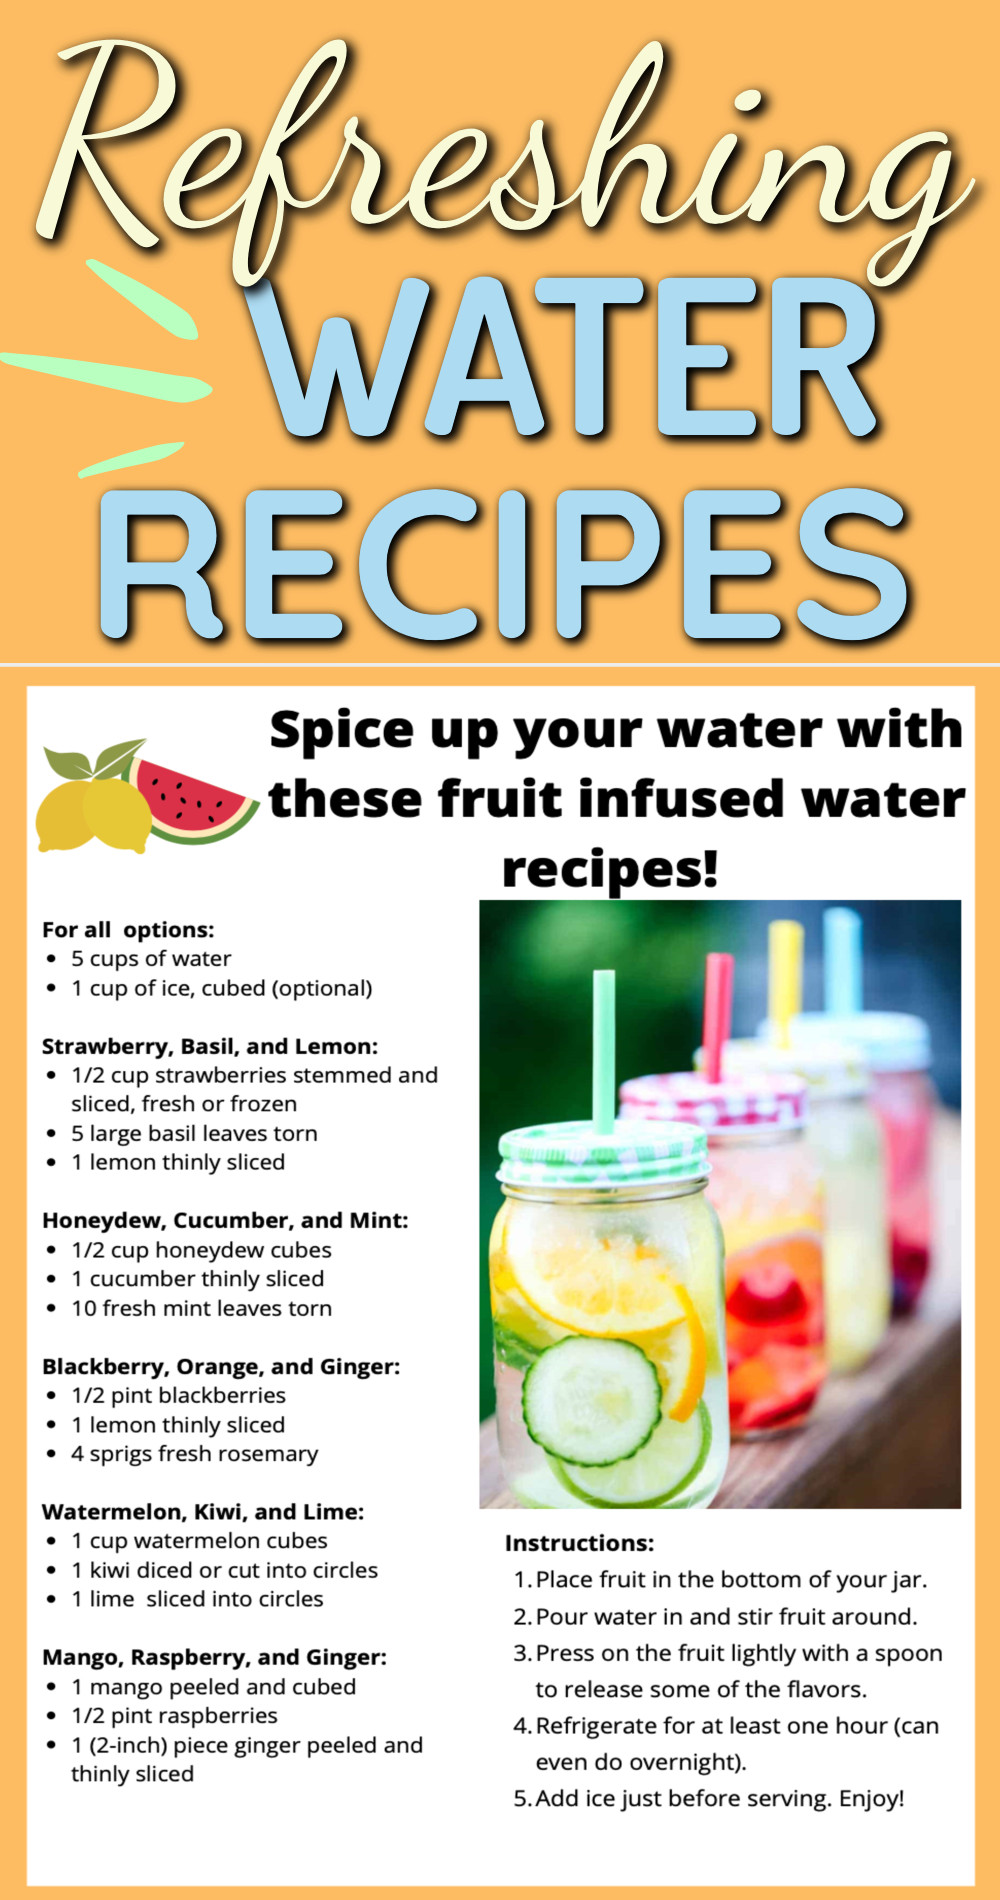 Refreshing water recipes